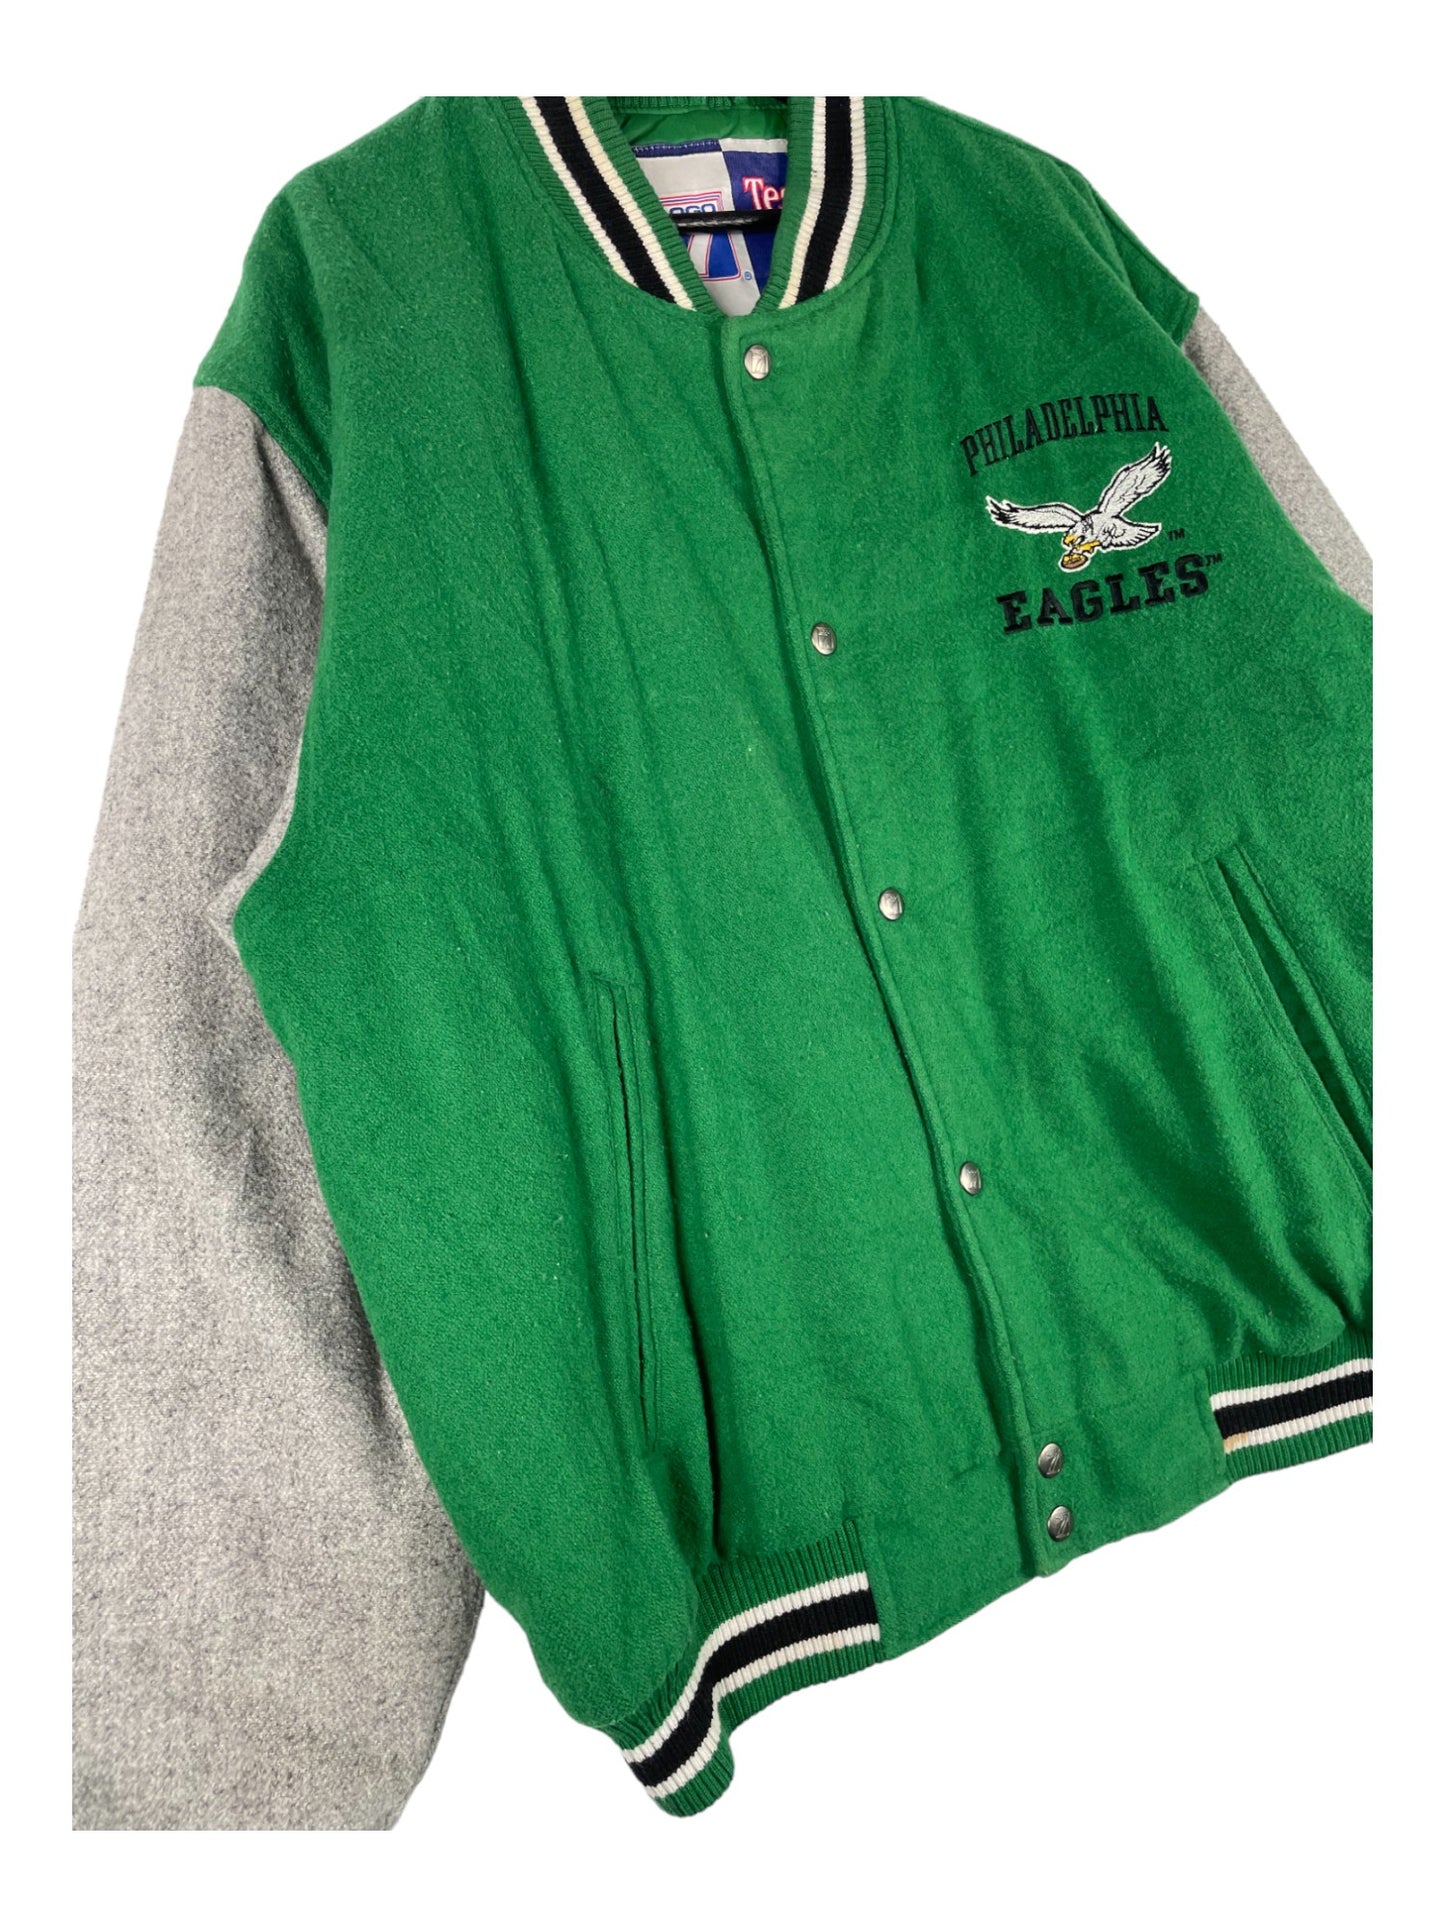 Eagles Varsity Jacket